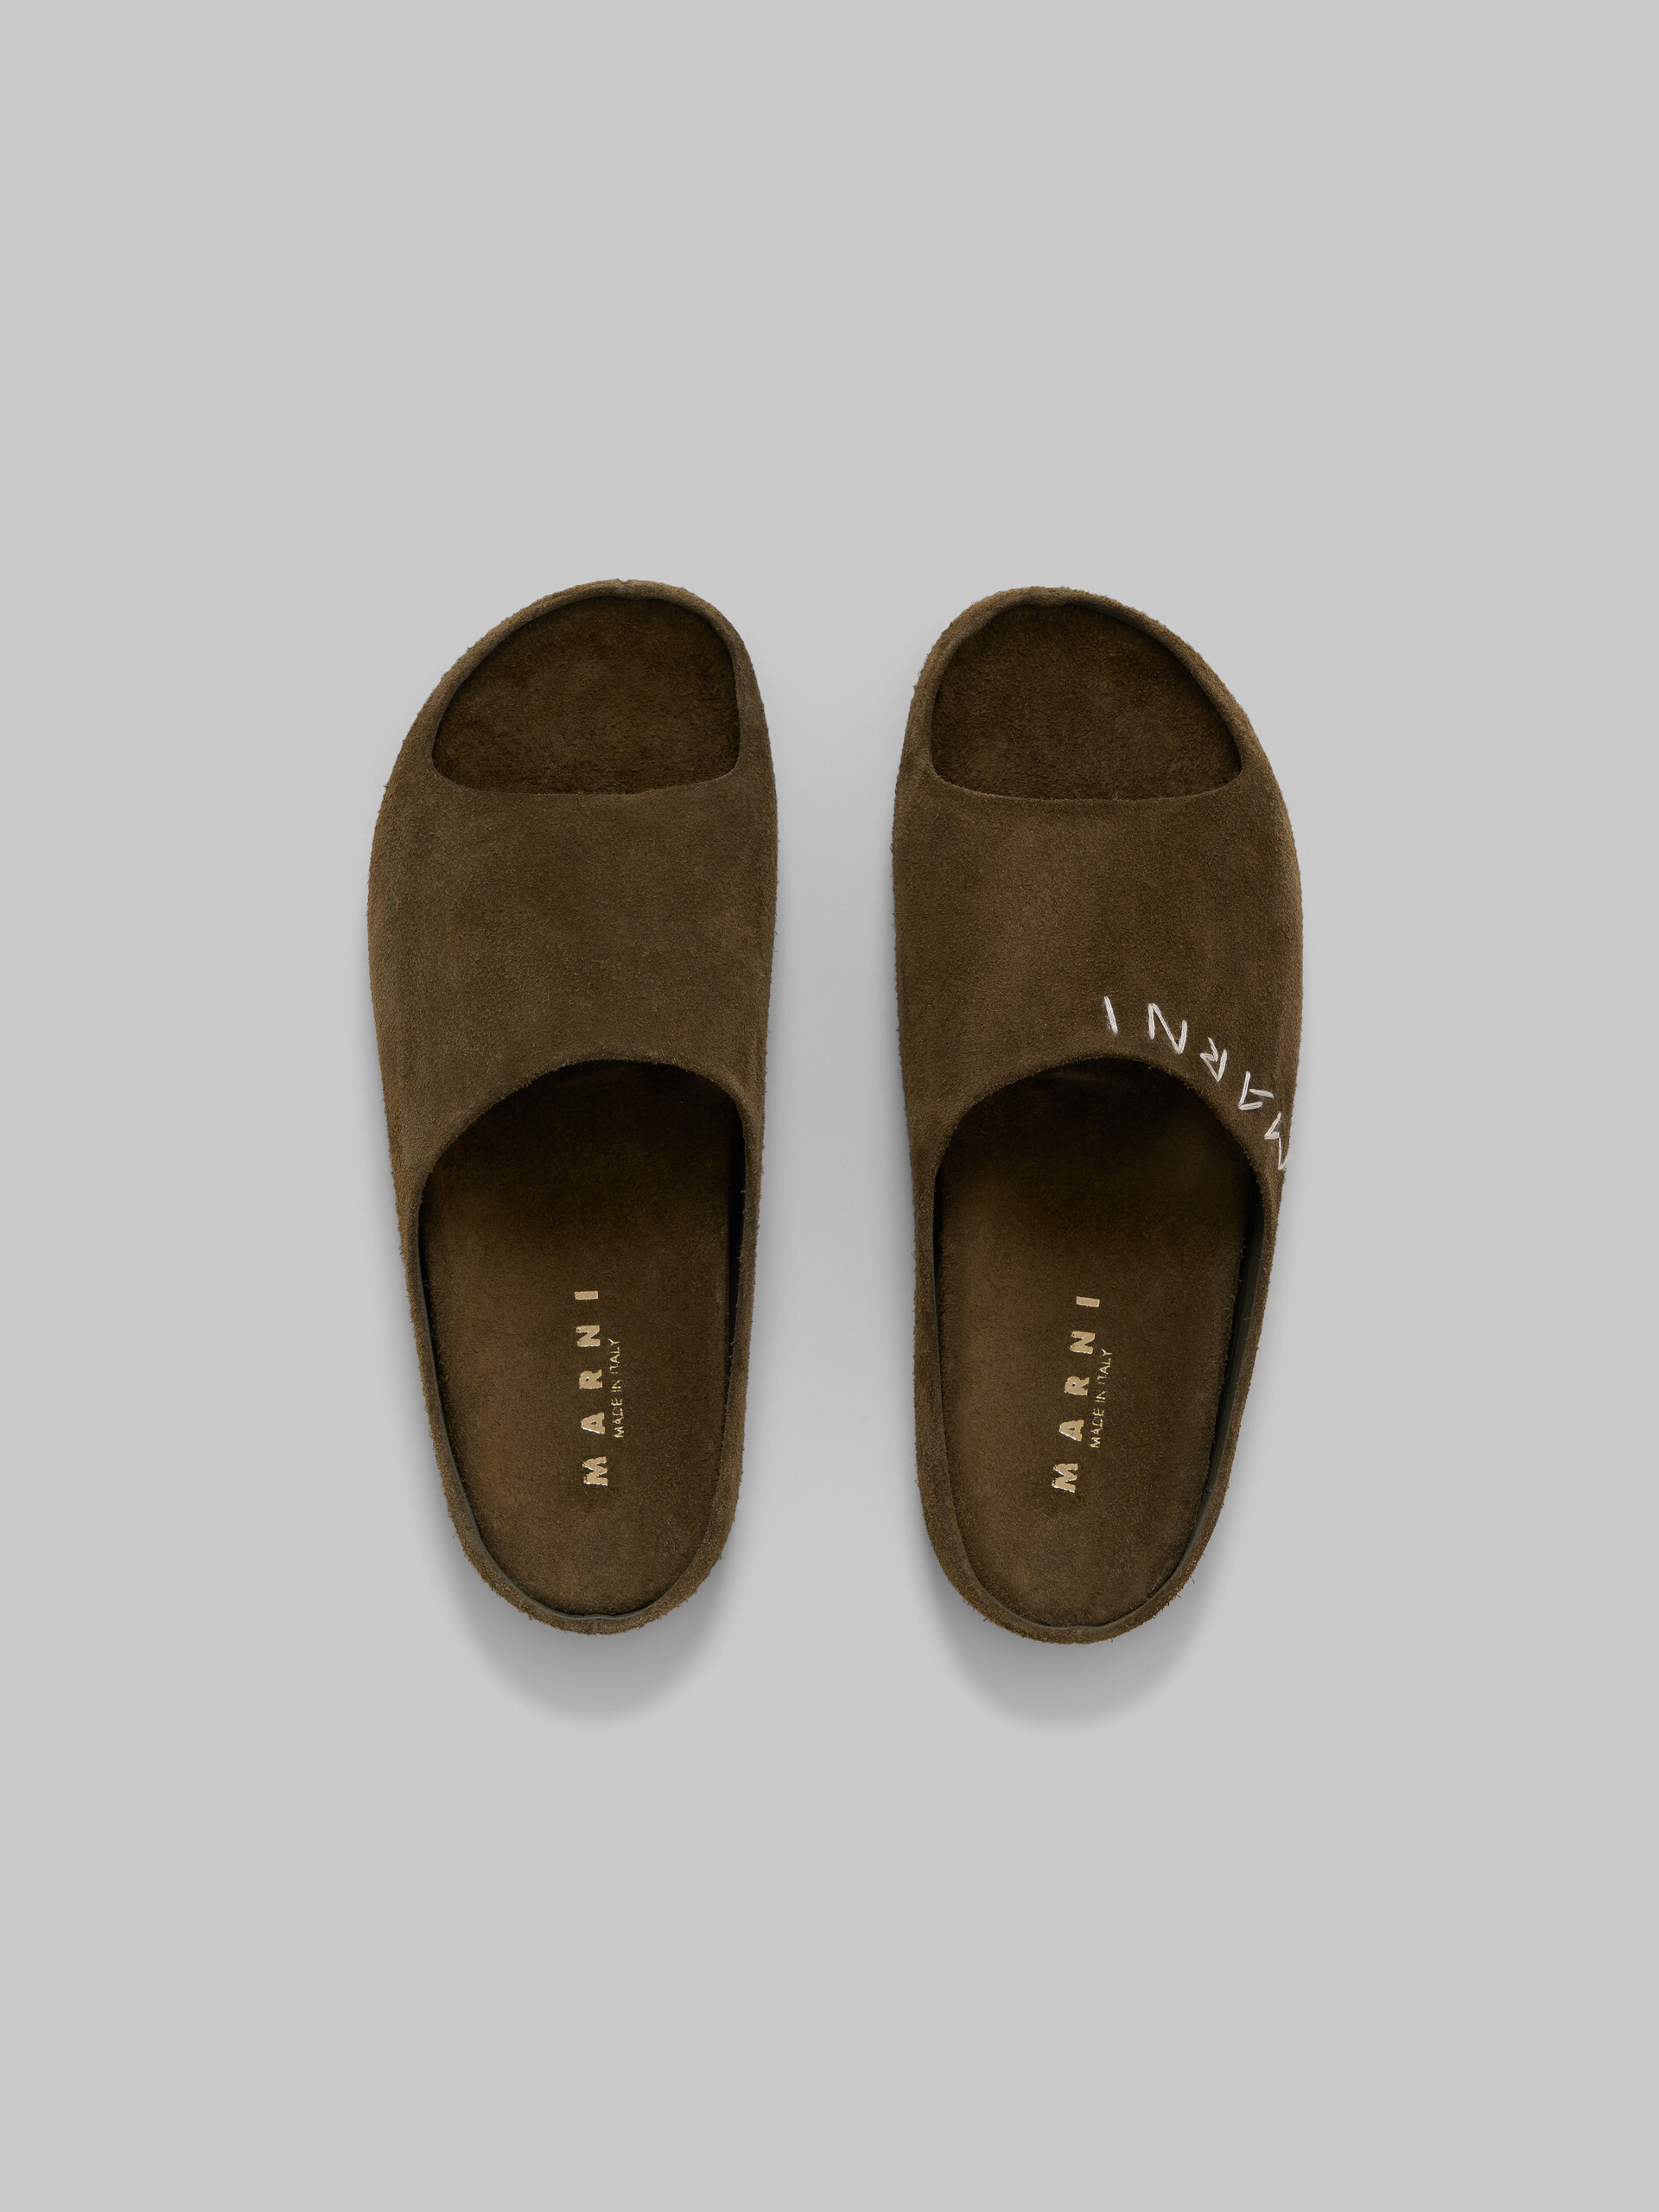 Lilac suede Fusslide sandal - Sandals - Image 4